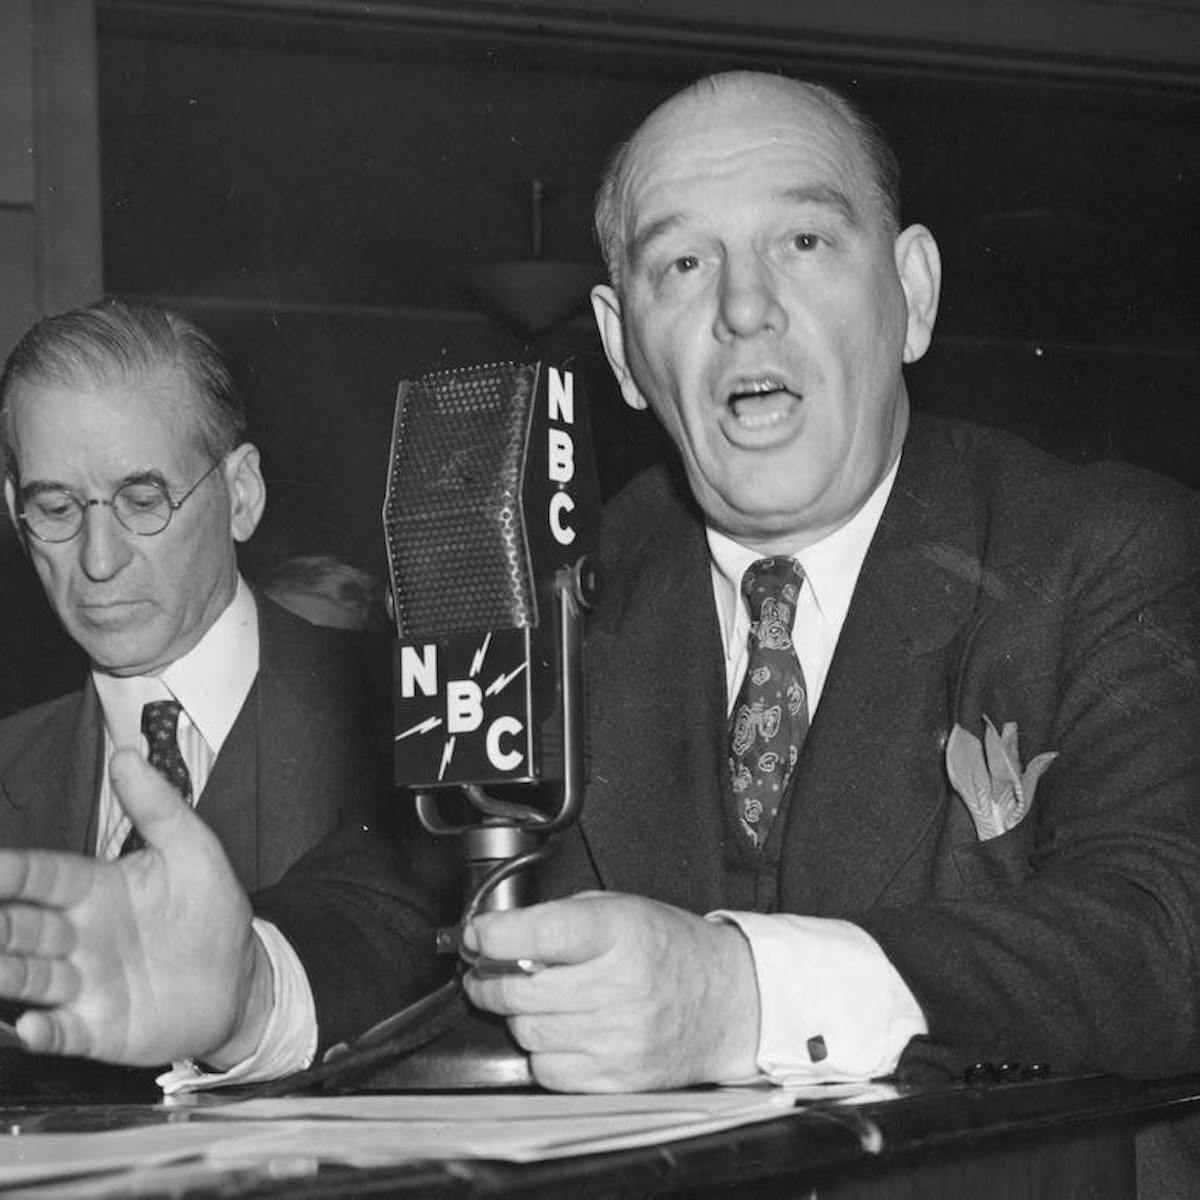 Did a Nazi sympathizer once represent Minnesota in the U.S. Senate?